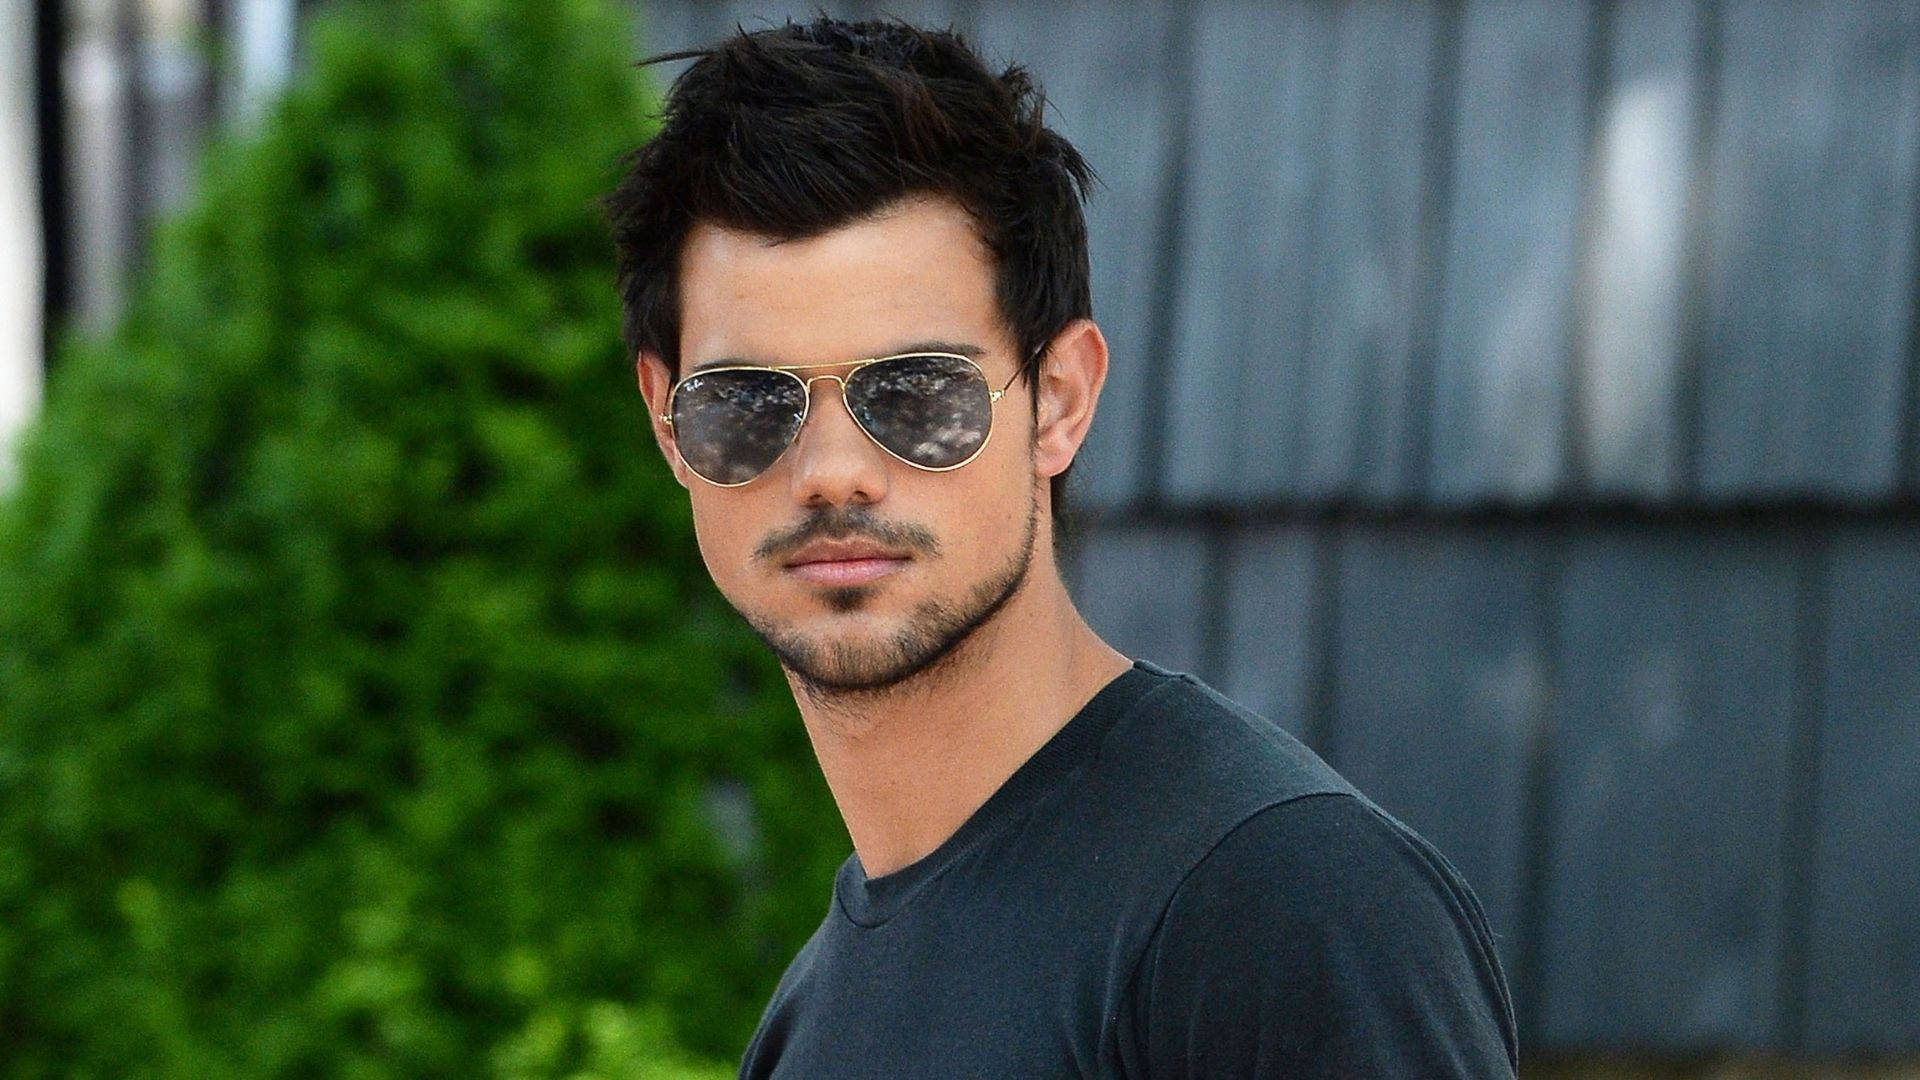 Classy Taylor Lautner Sunglasses Background